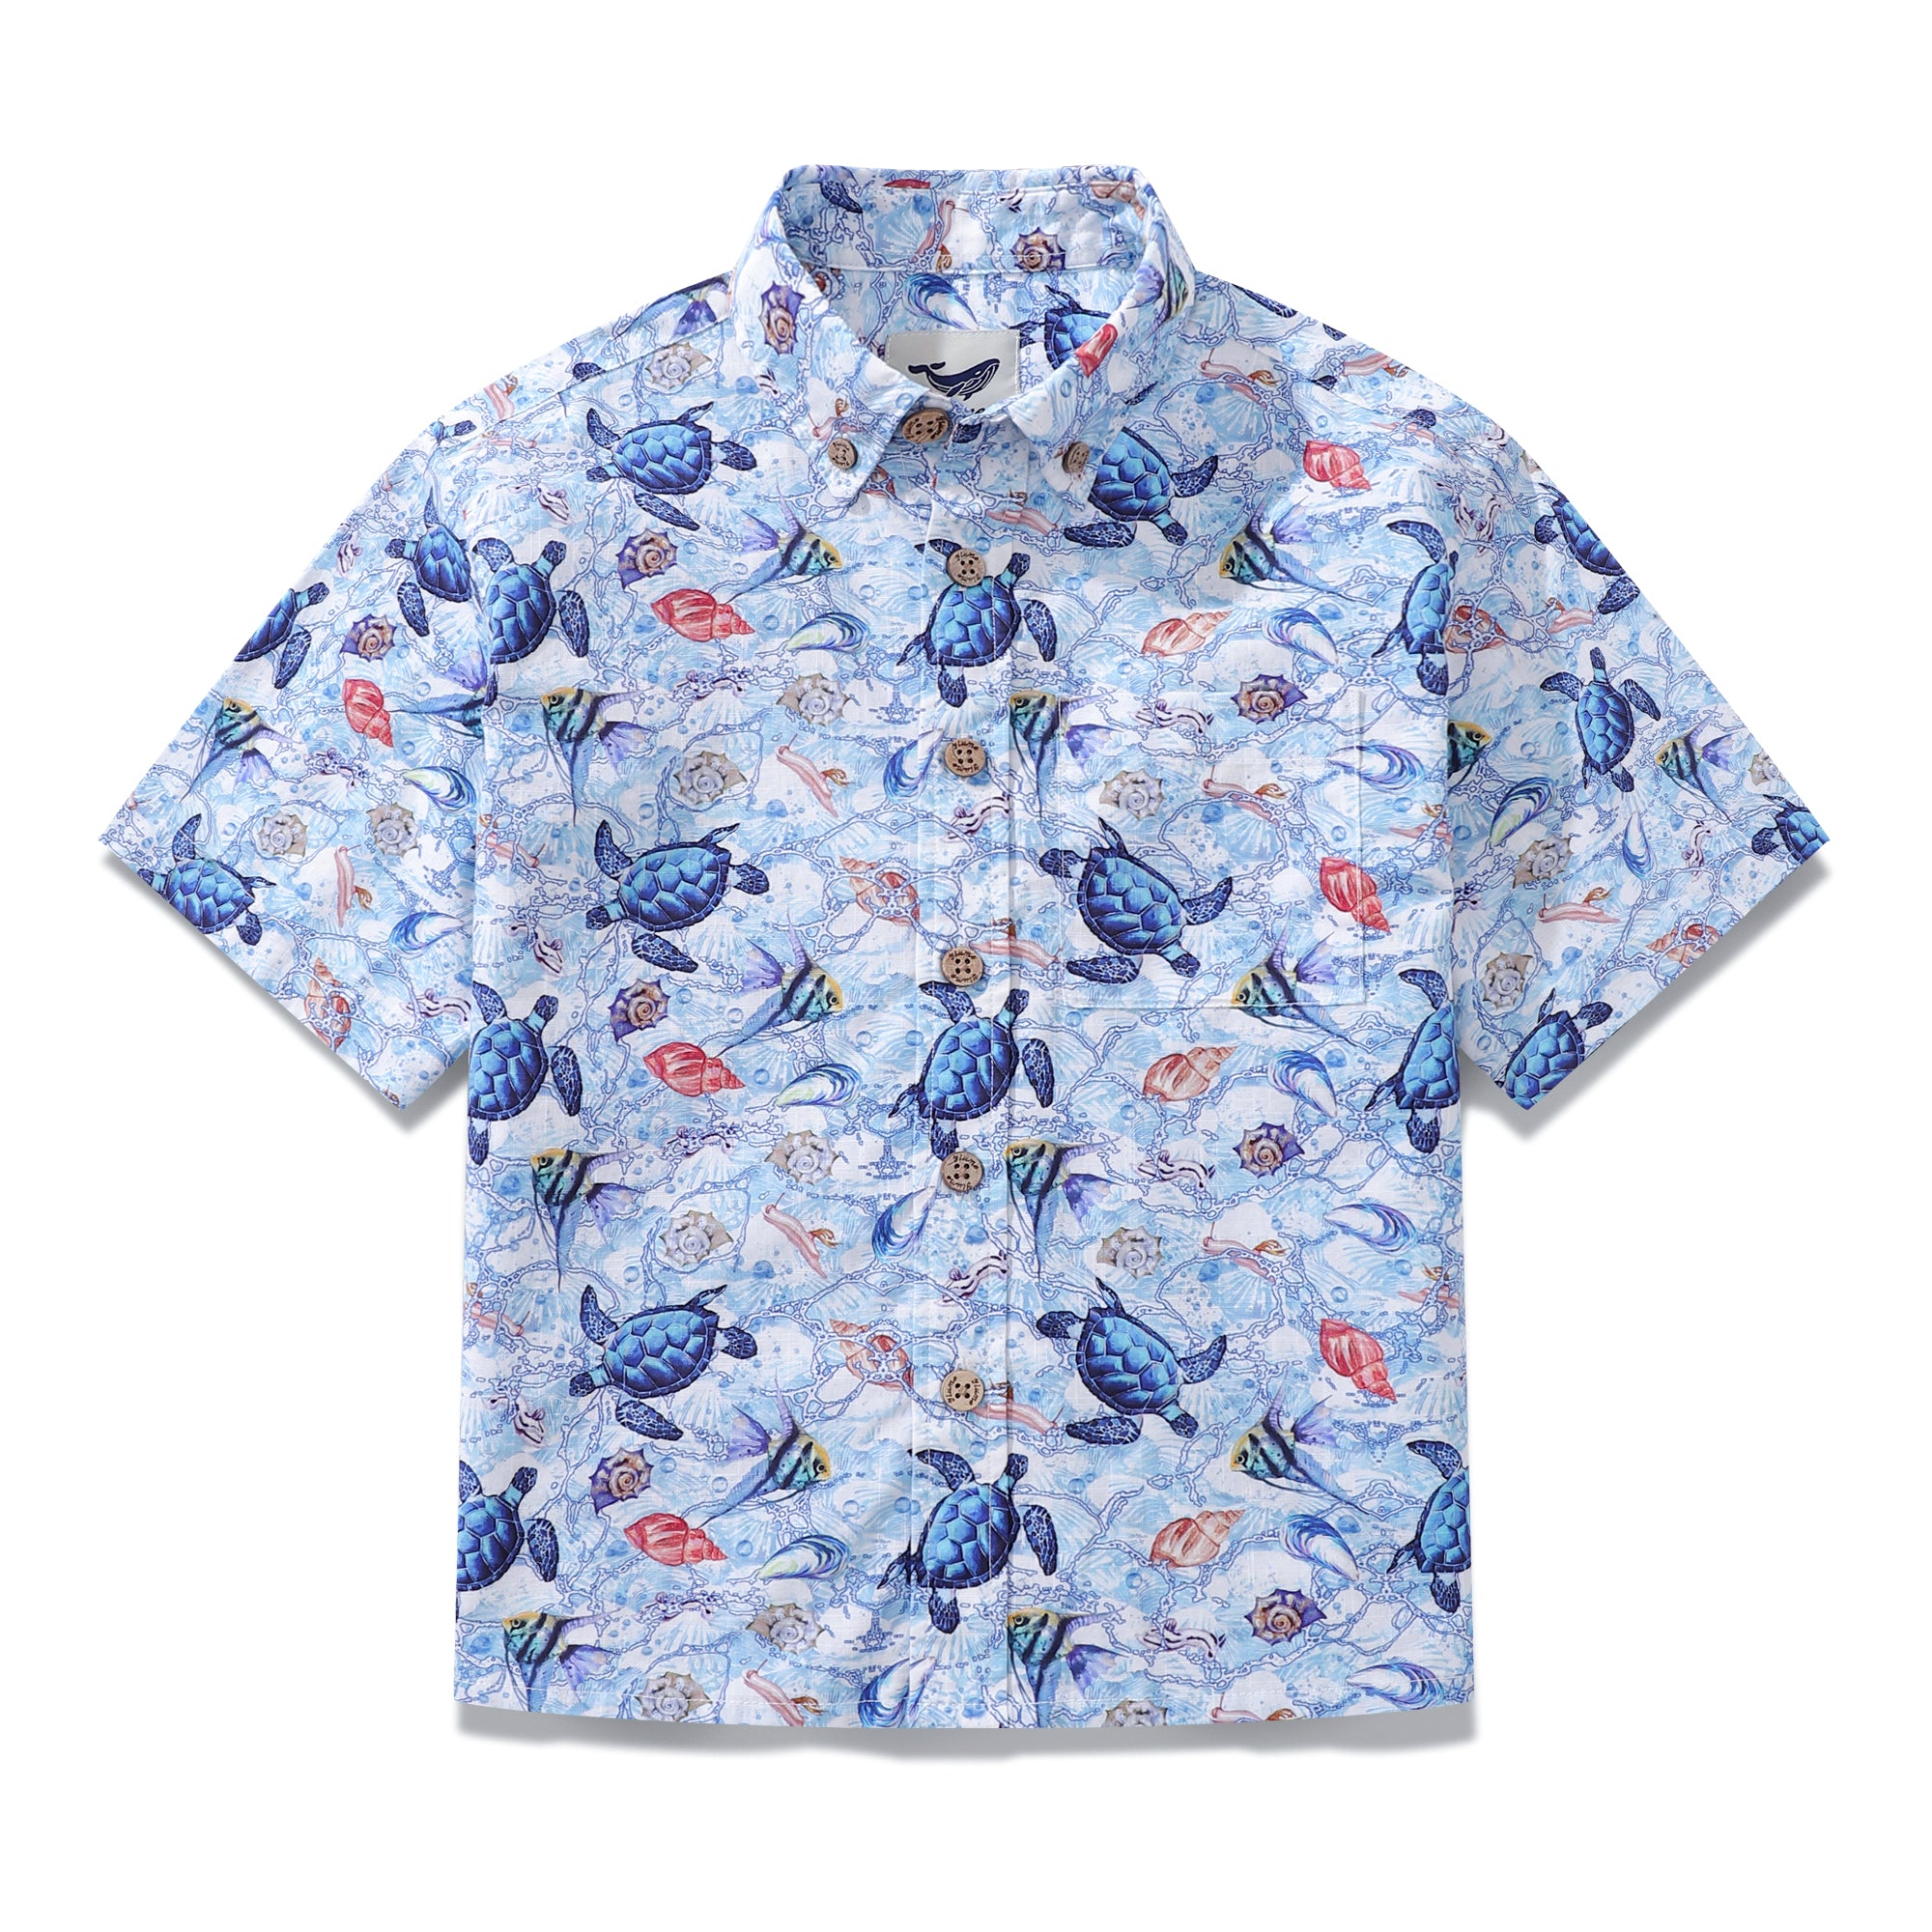 Children's Hawaiian Shirt Roaming Turtles Print Cotton Button-down Short Sleeve